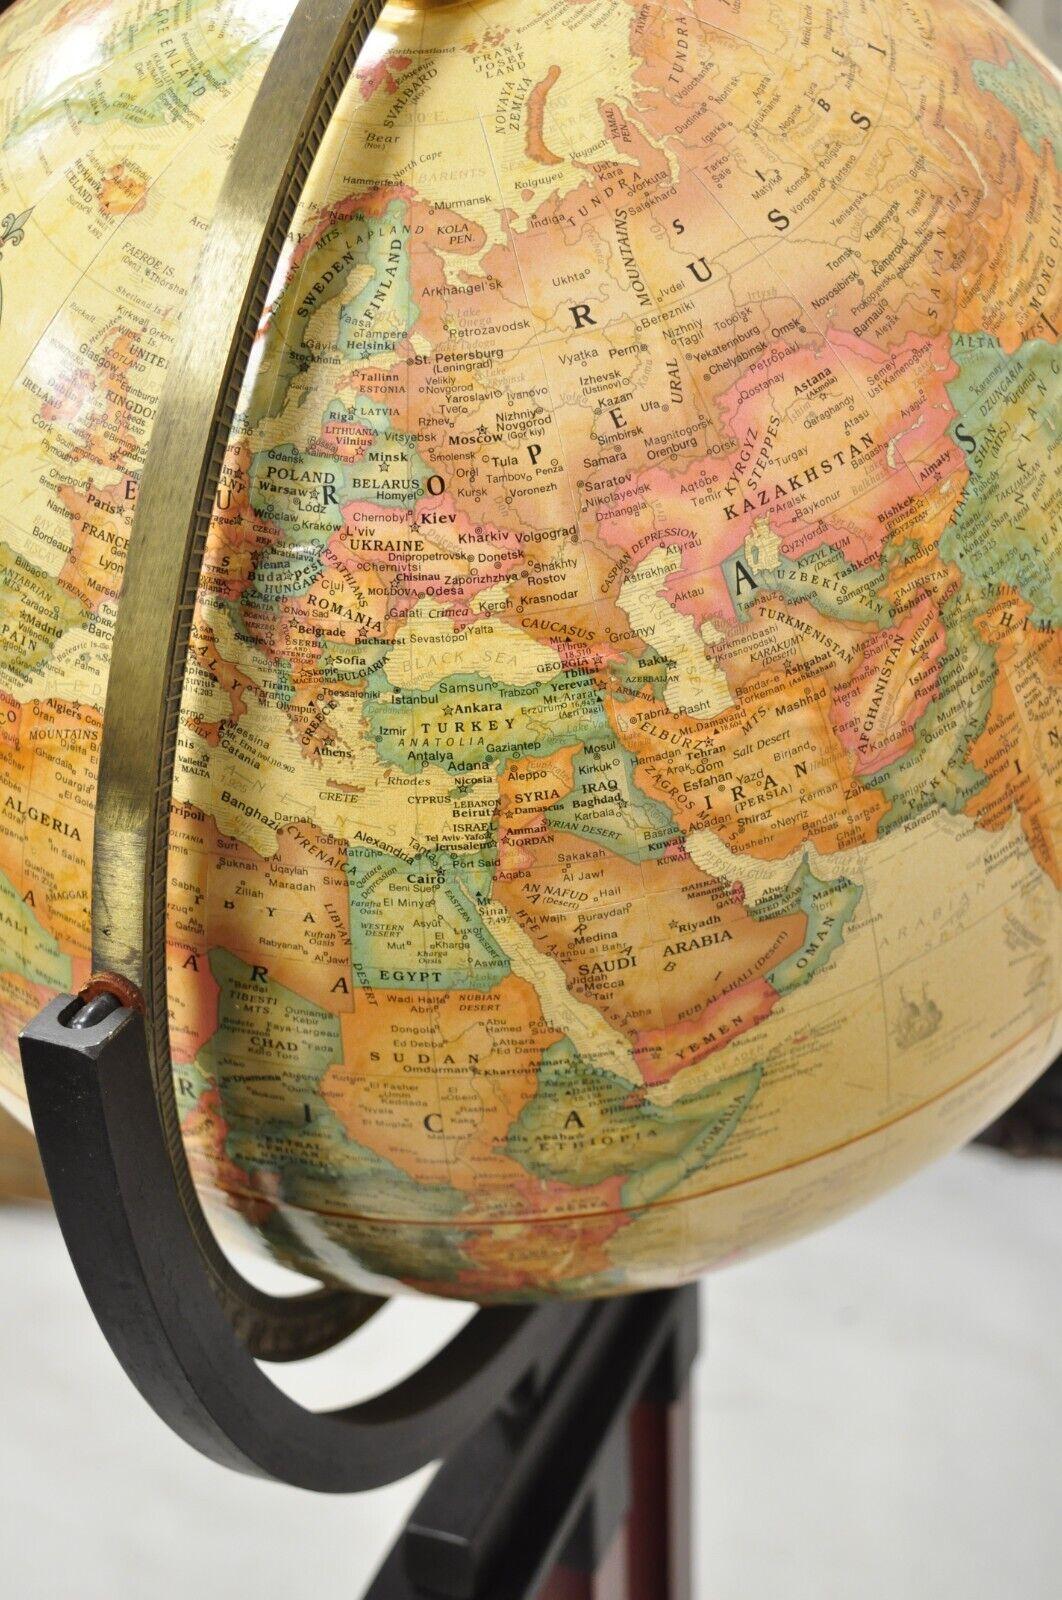 replogle 16 inch diameter globe world classic series